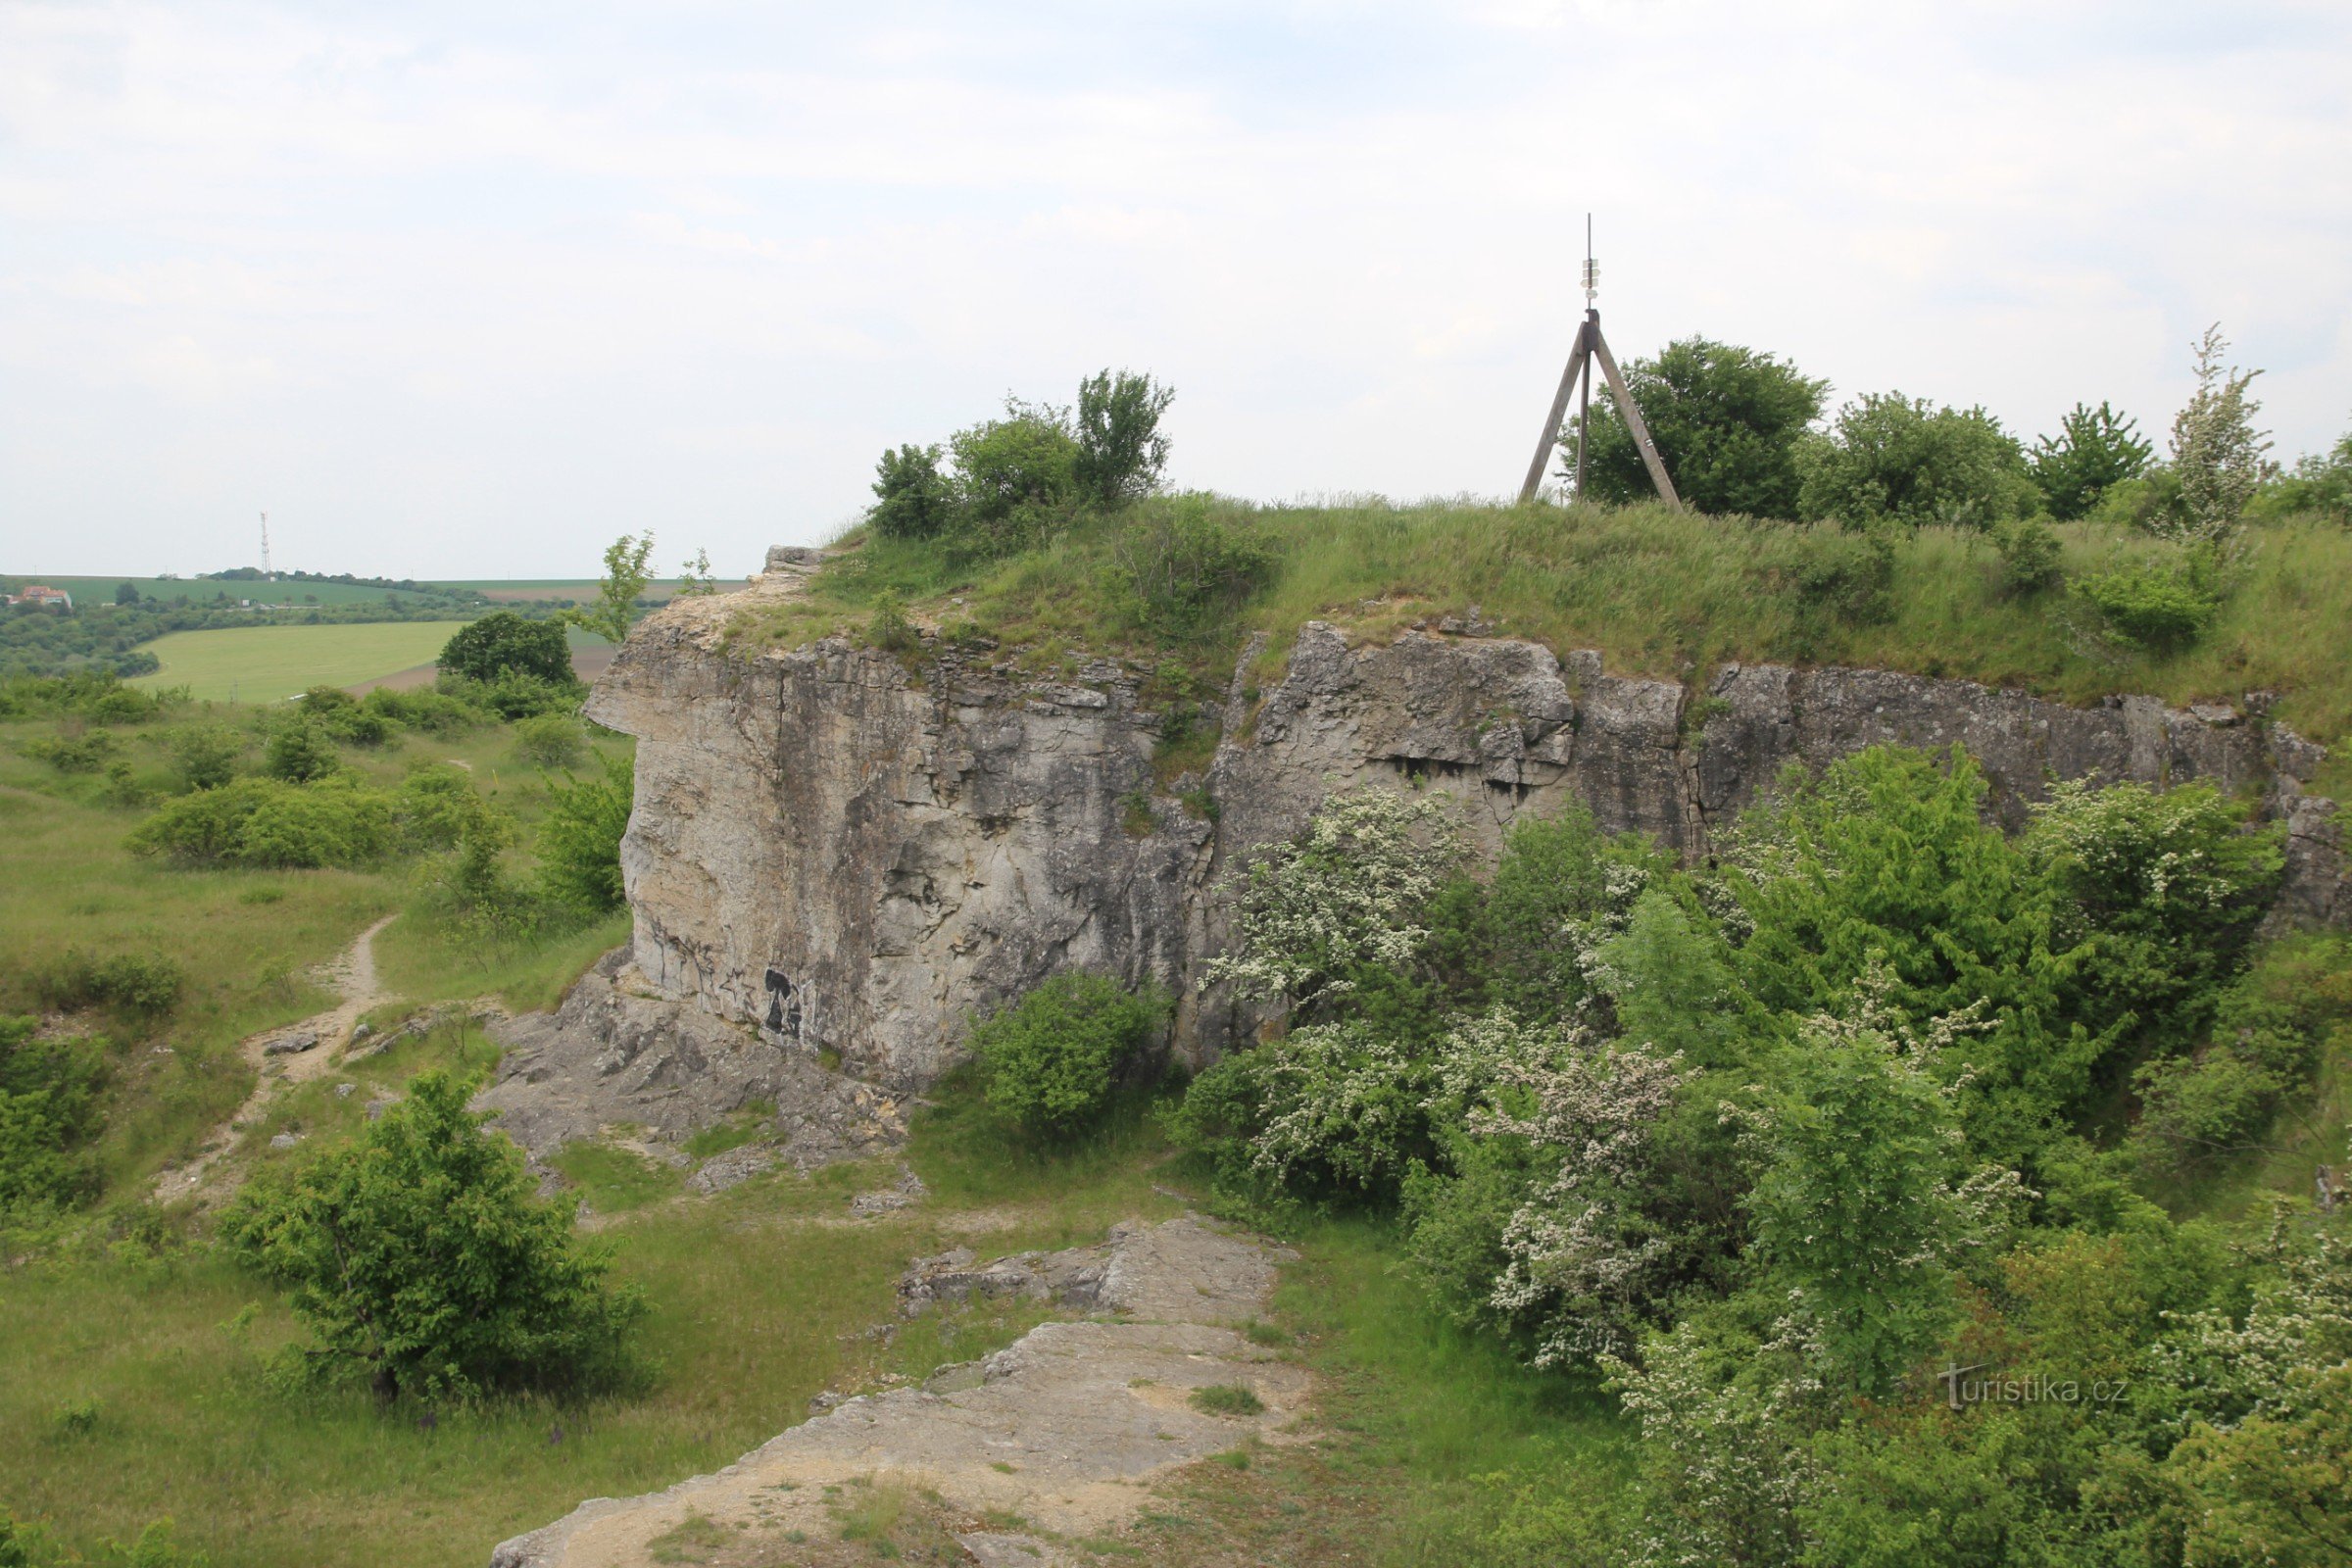 The top part of Stránská skála with the overgrown former quarry